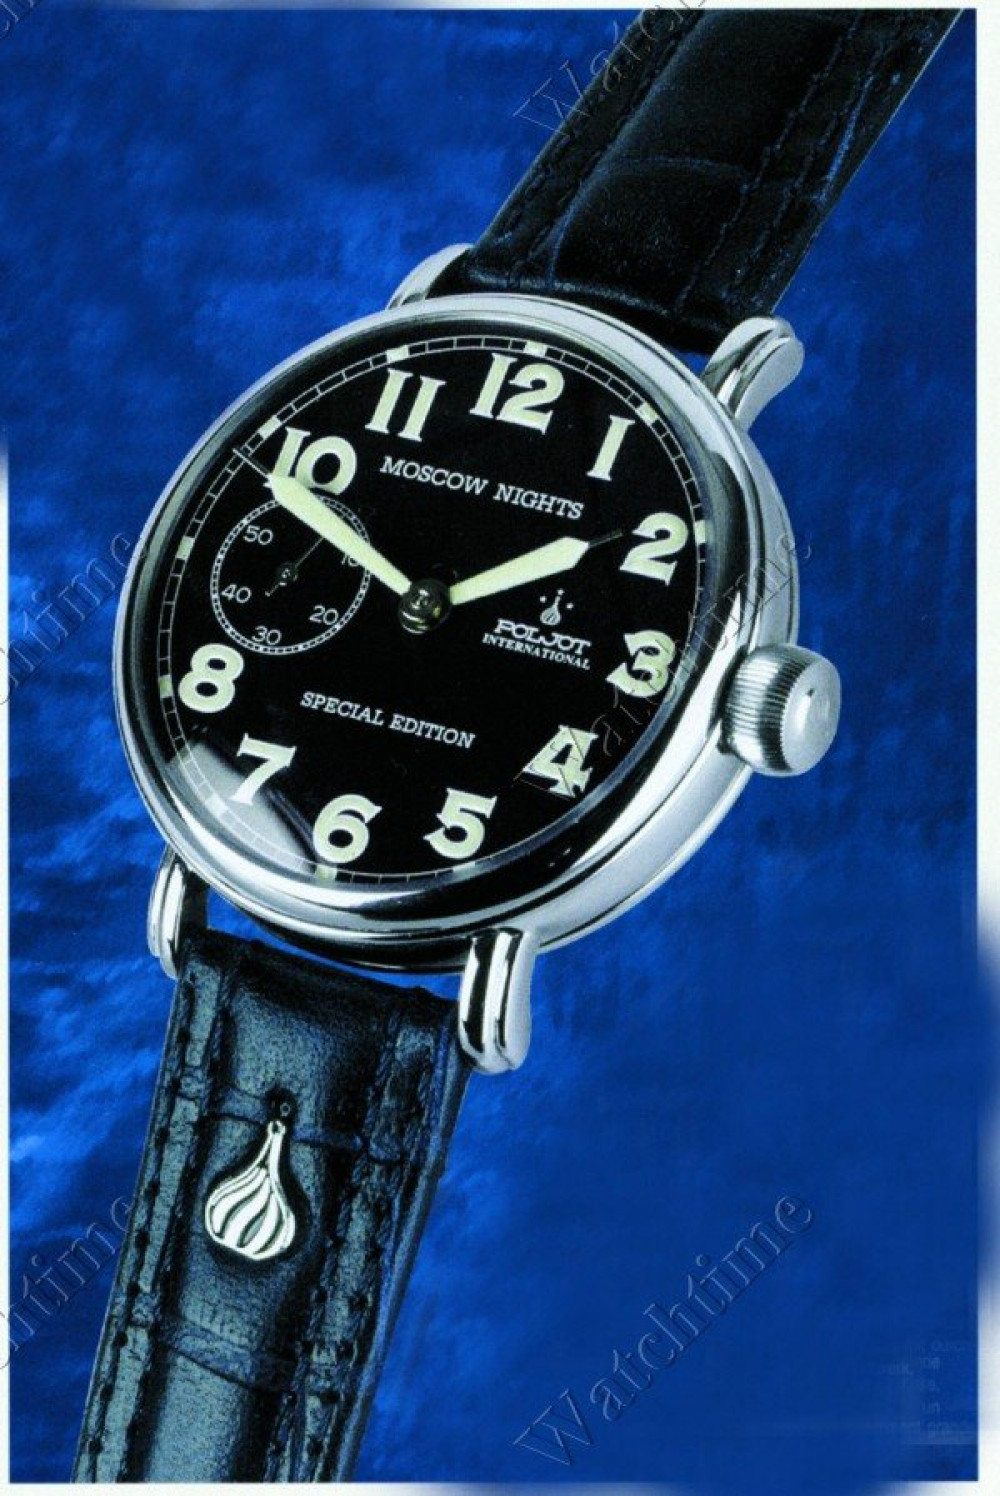 Zegarek firmy Poljot - International, model Moscow Nights